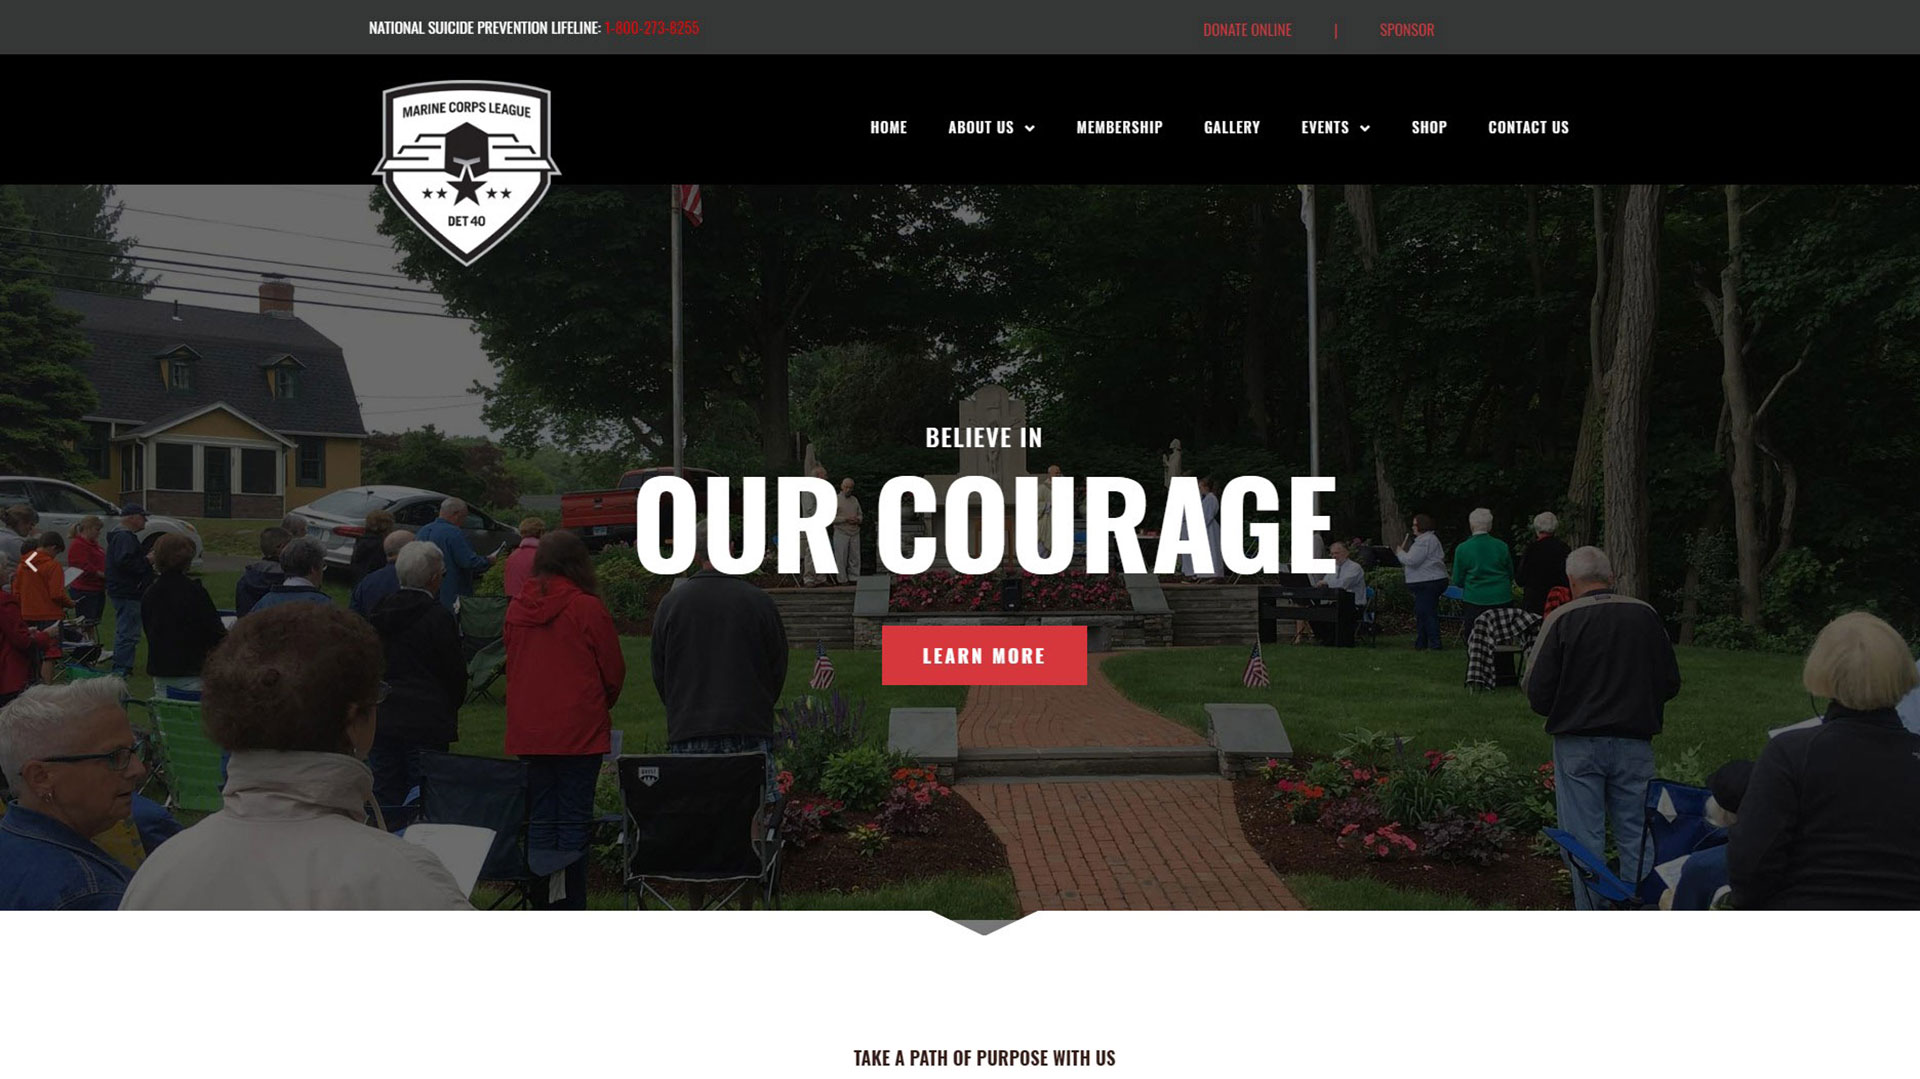 Website for Marine Corp League